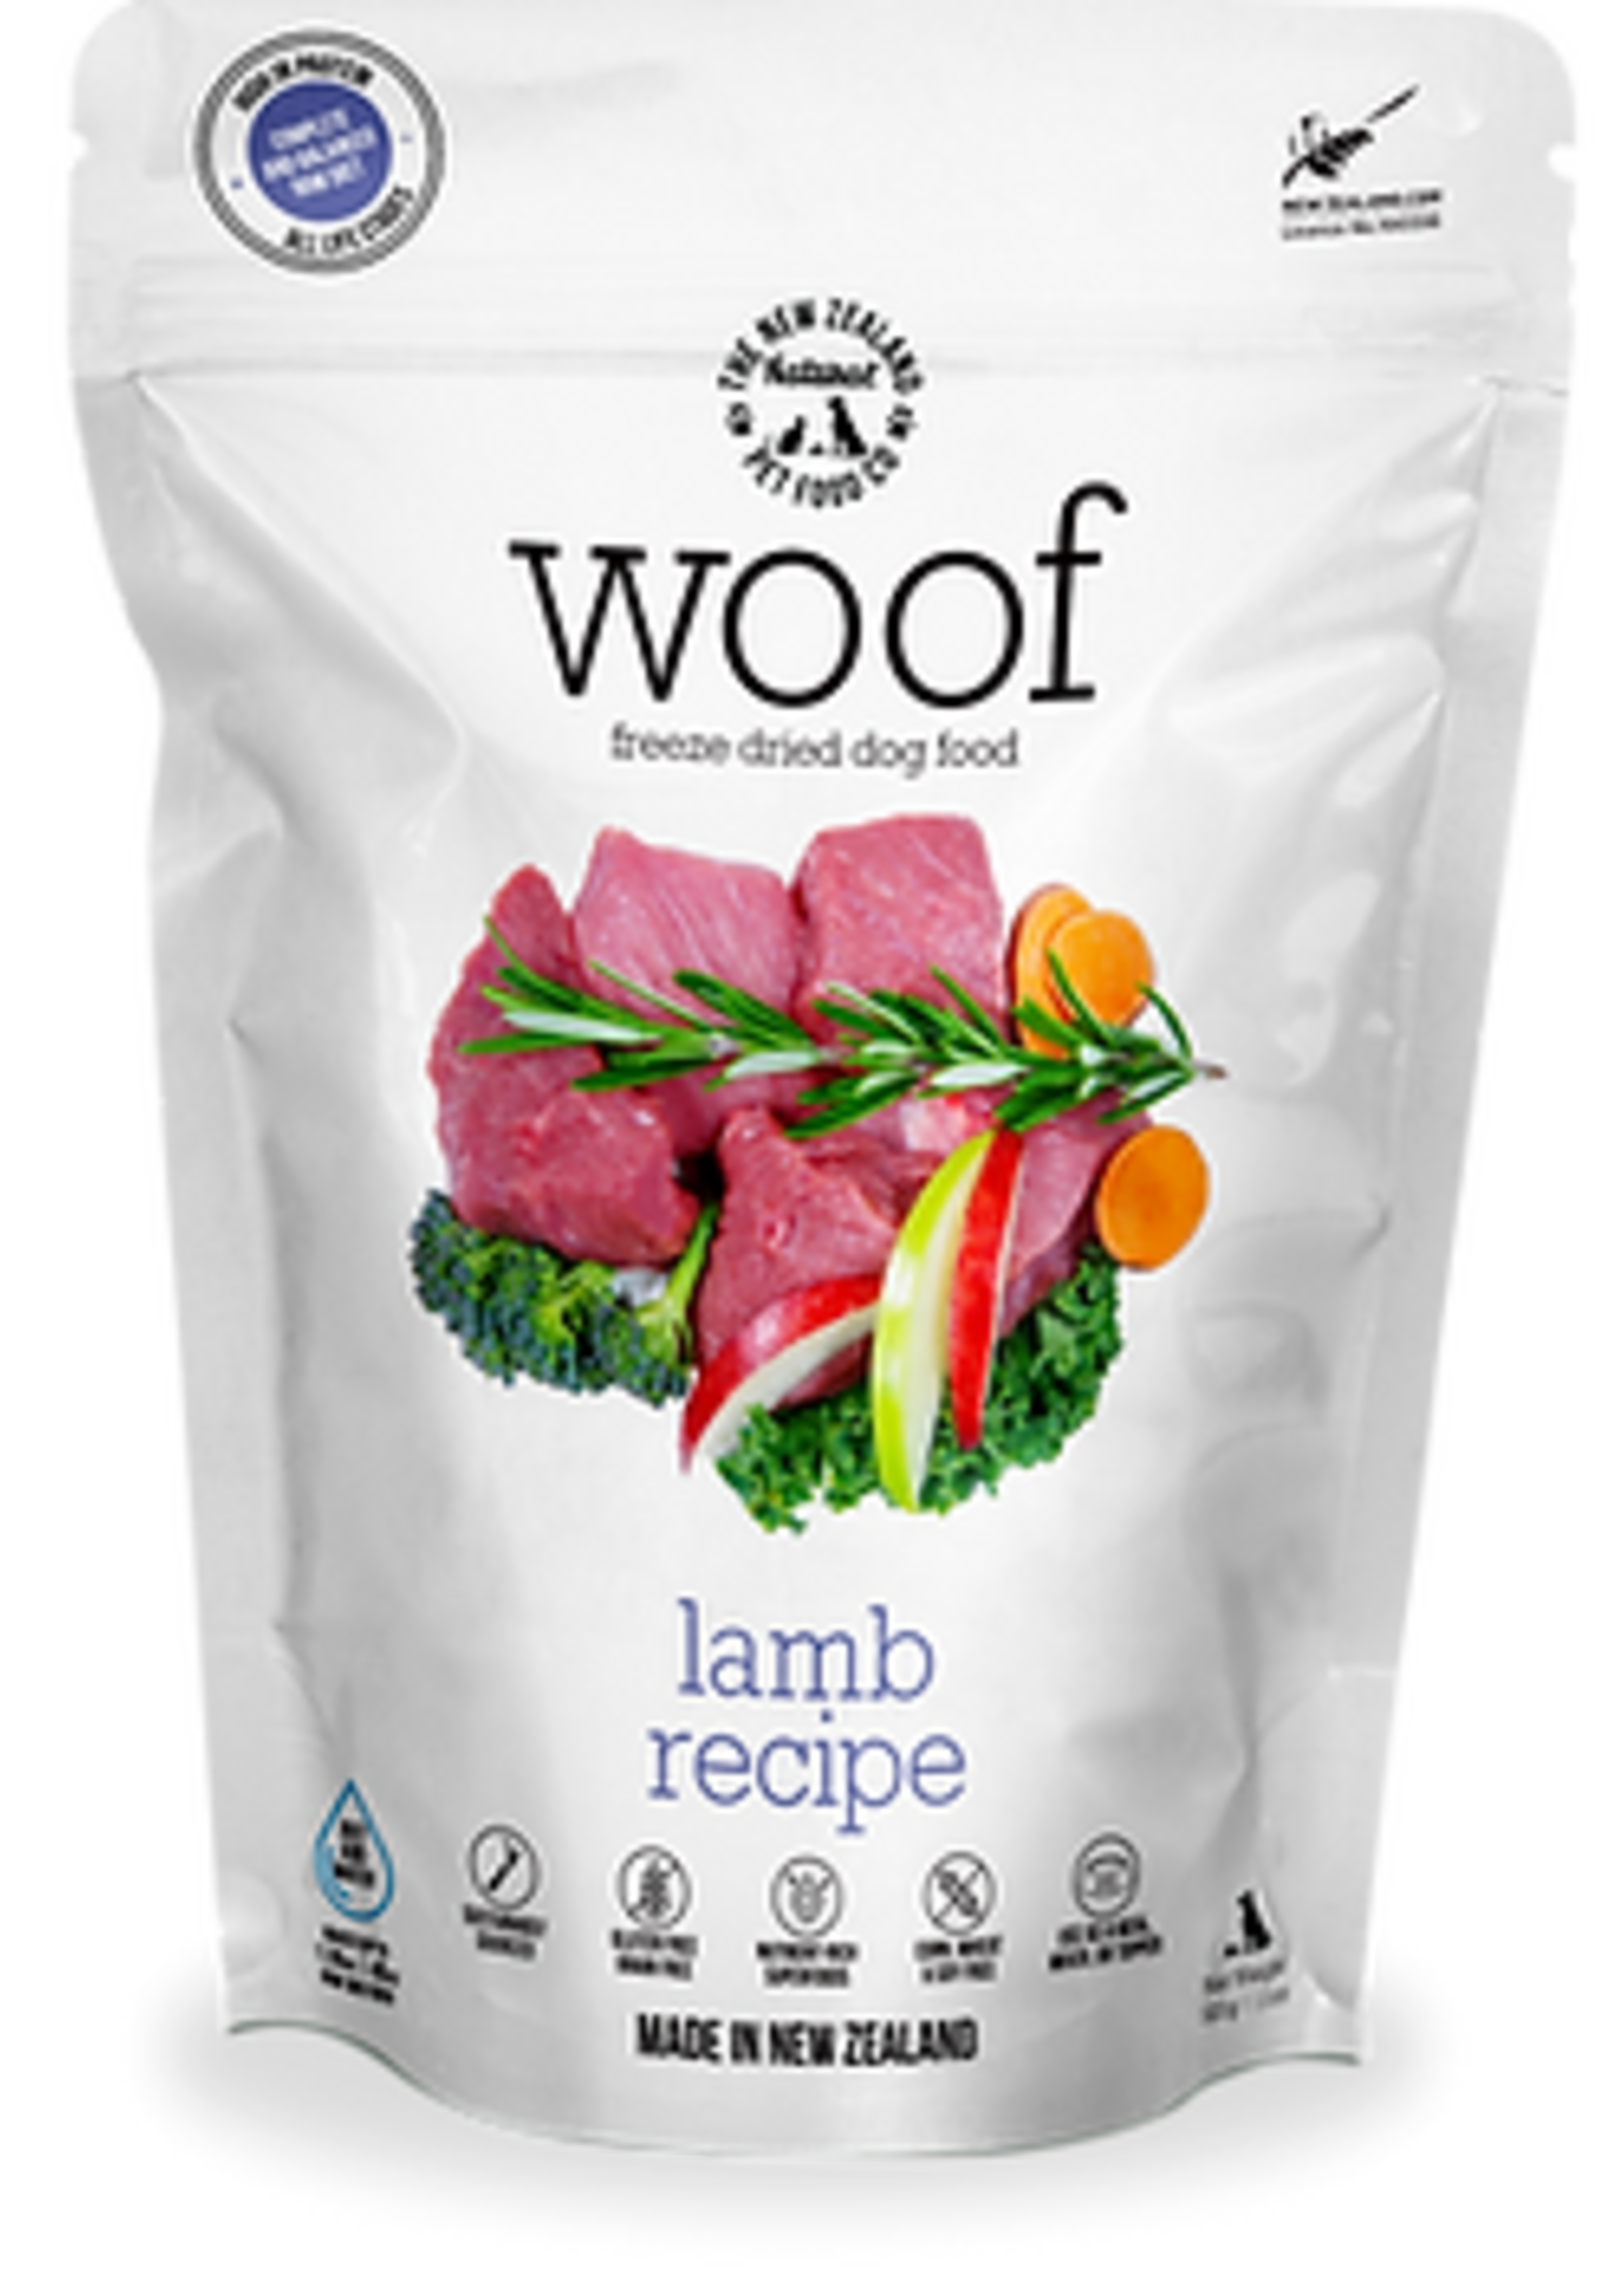 The New Zealand Natural Pet Food Co. Woof Freeze Dried Dog Food Lamb Recipe 280g